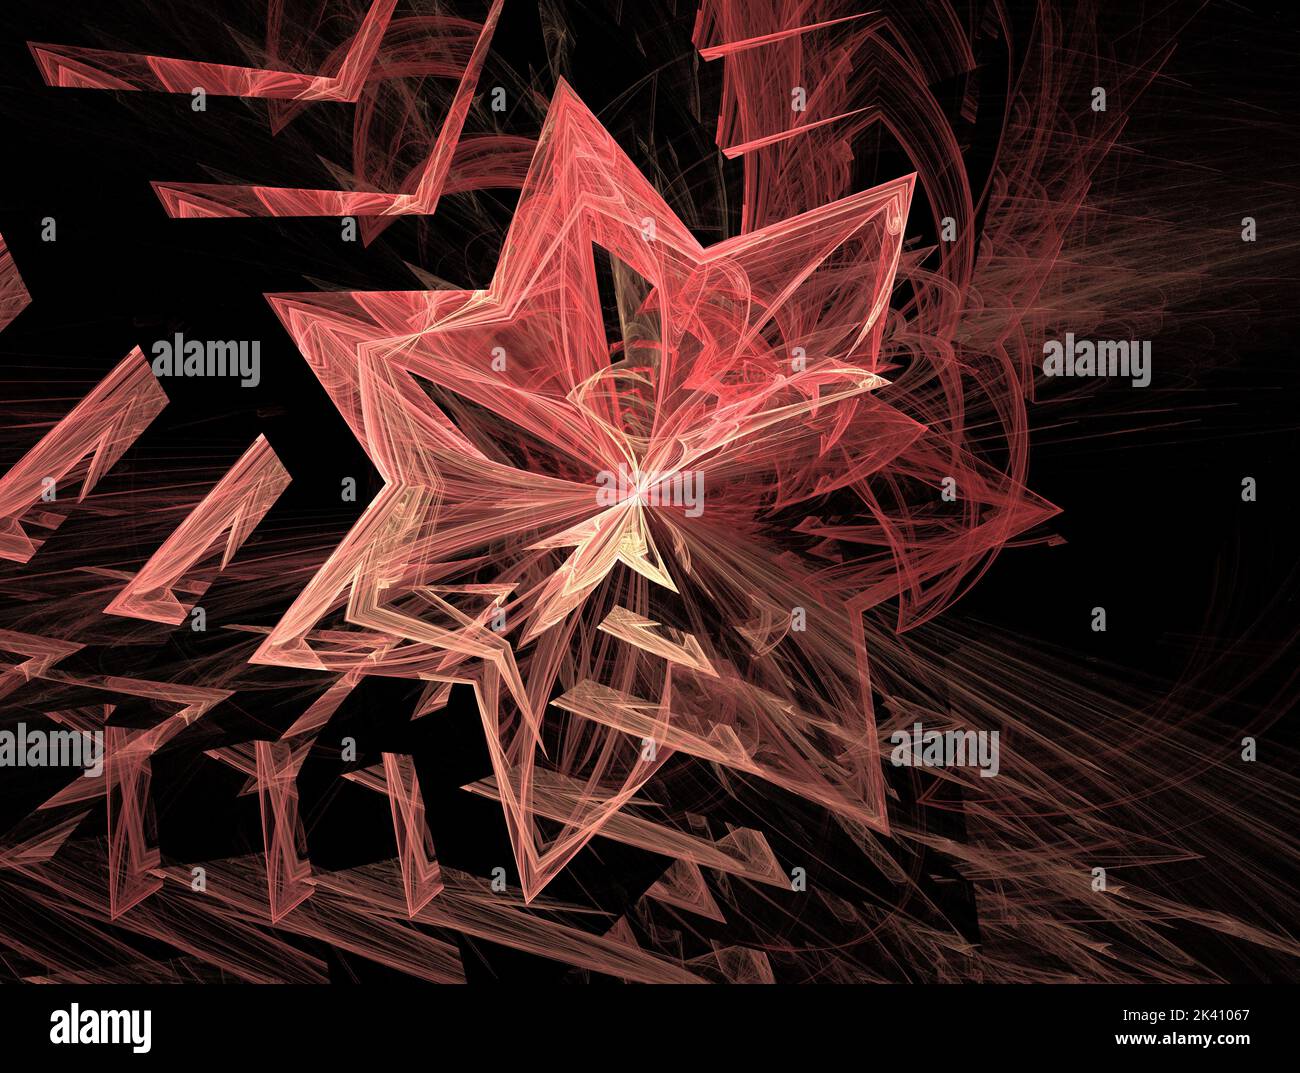 Imaginatory lush fractal texture image abstract background Stock Photo